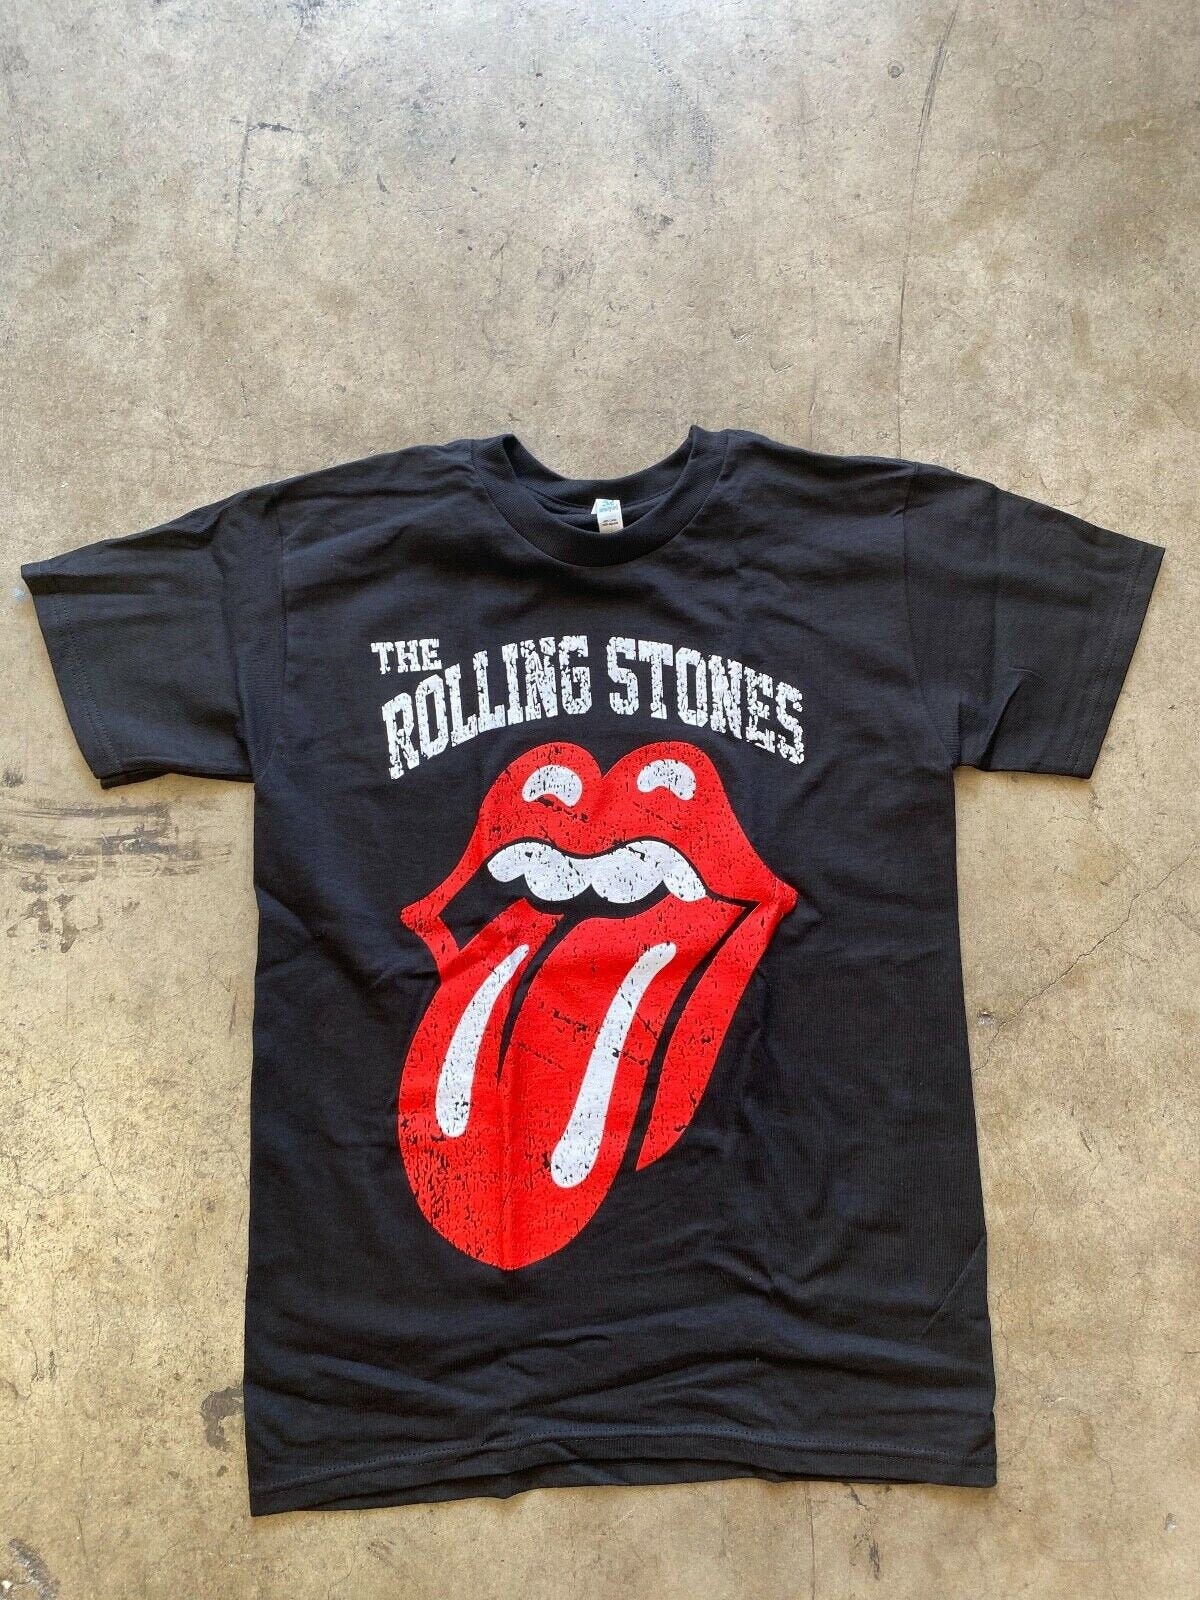 Rolling Stones T-Shirt | Etsy